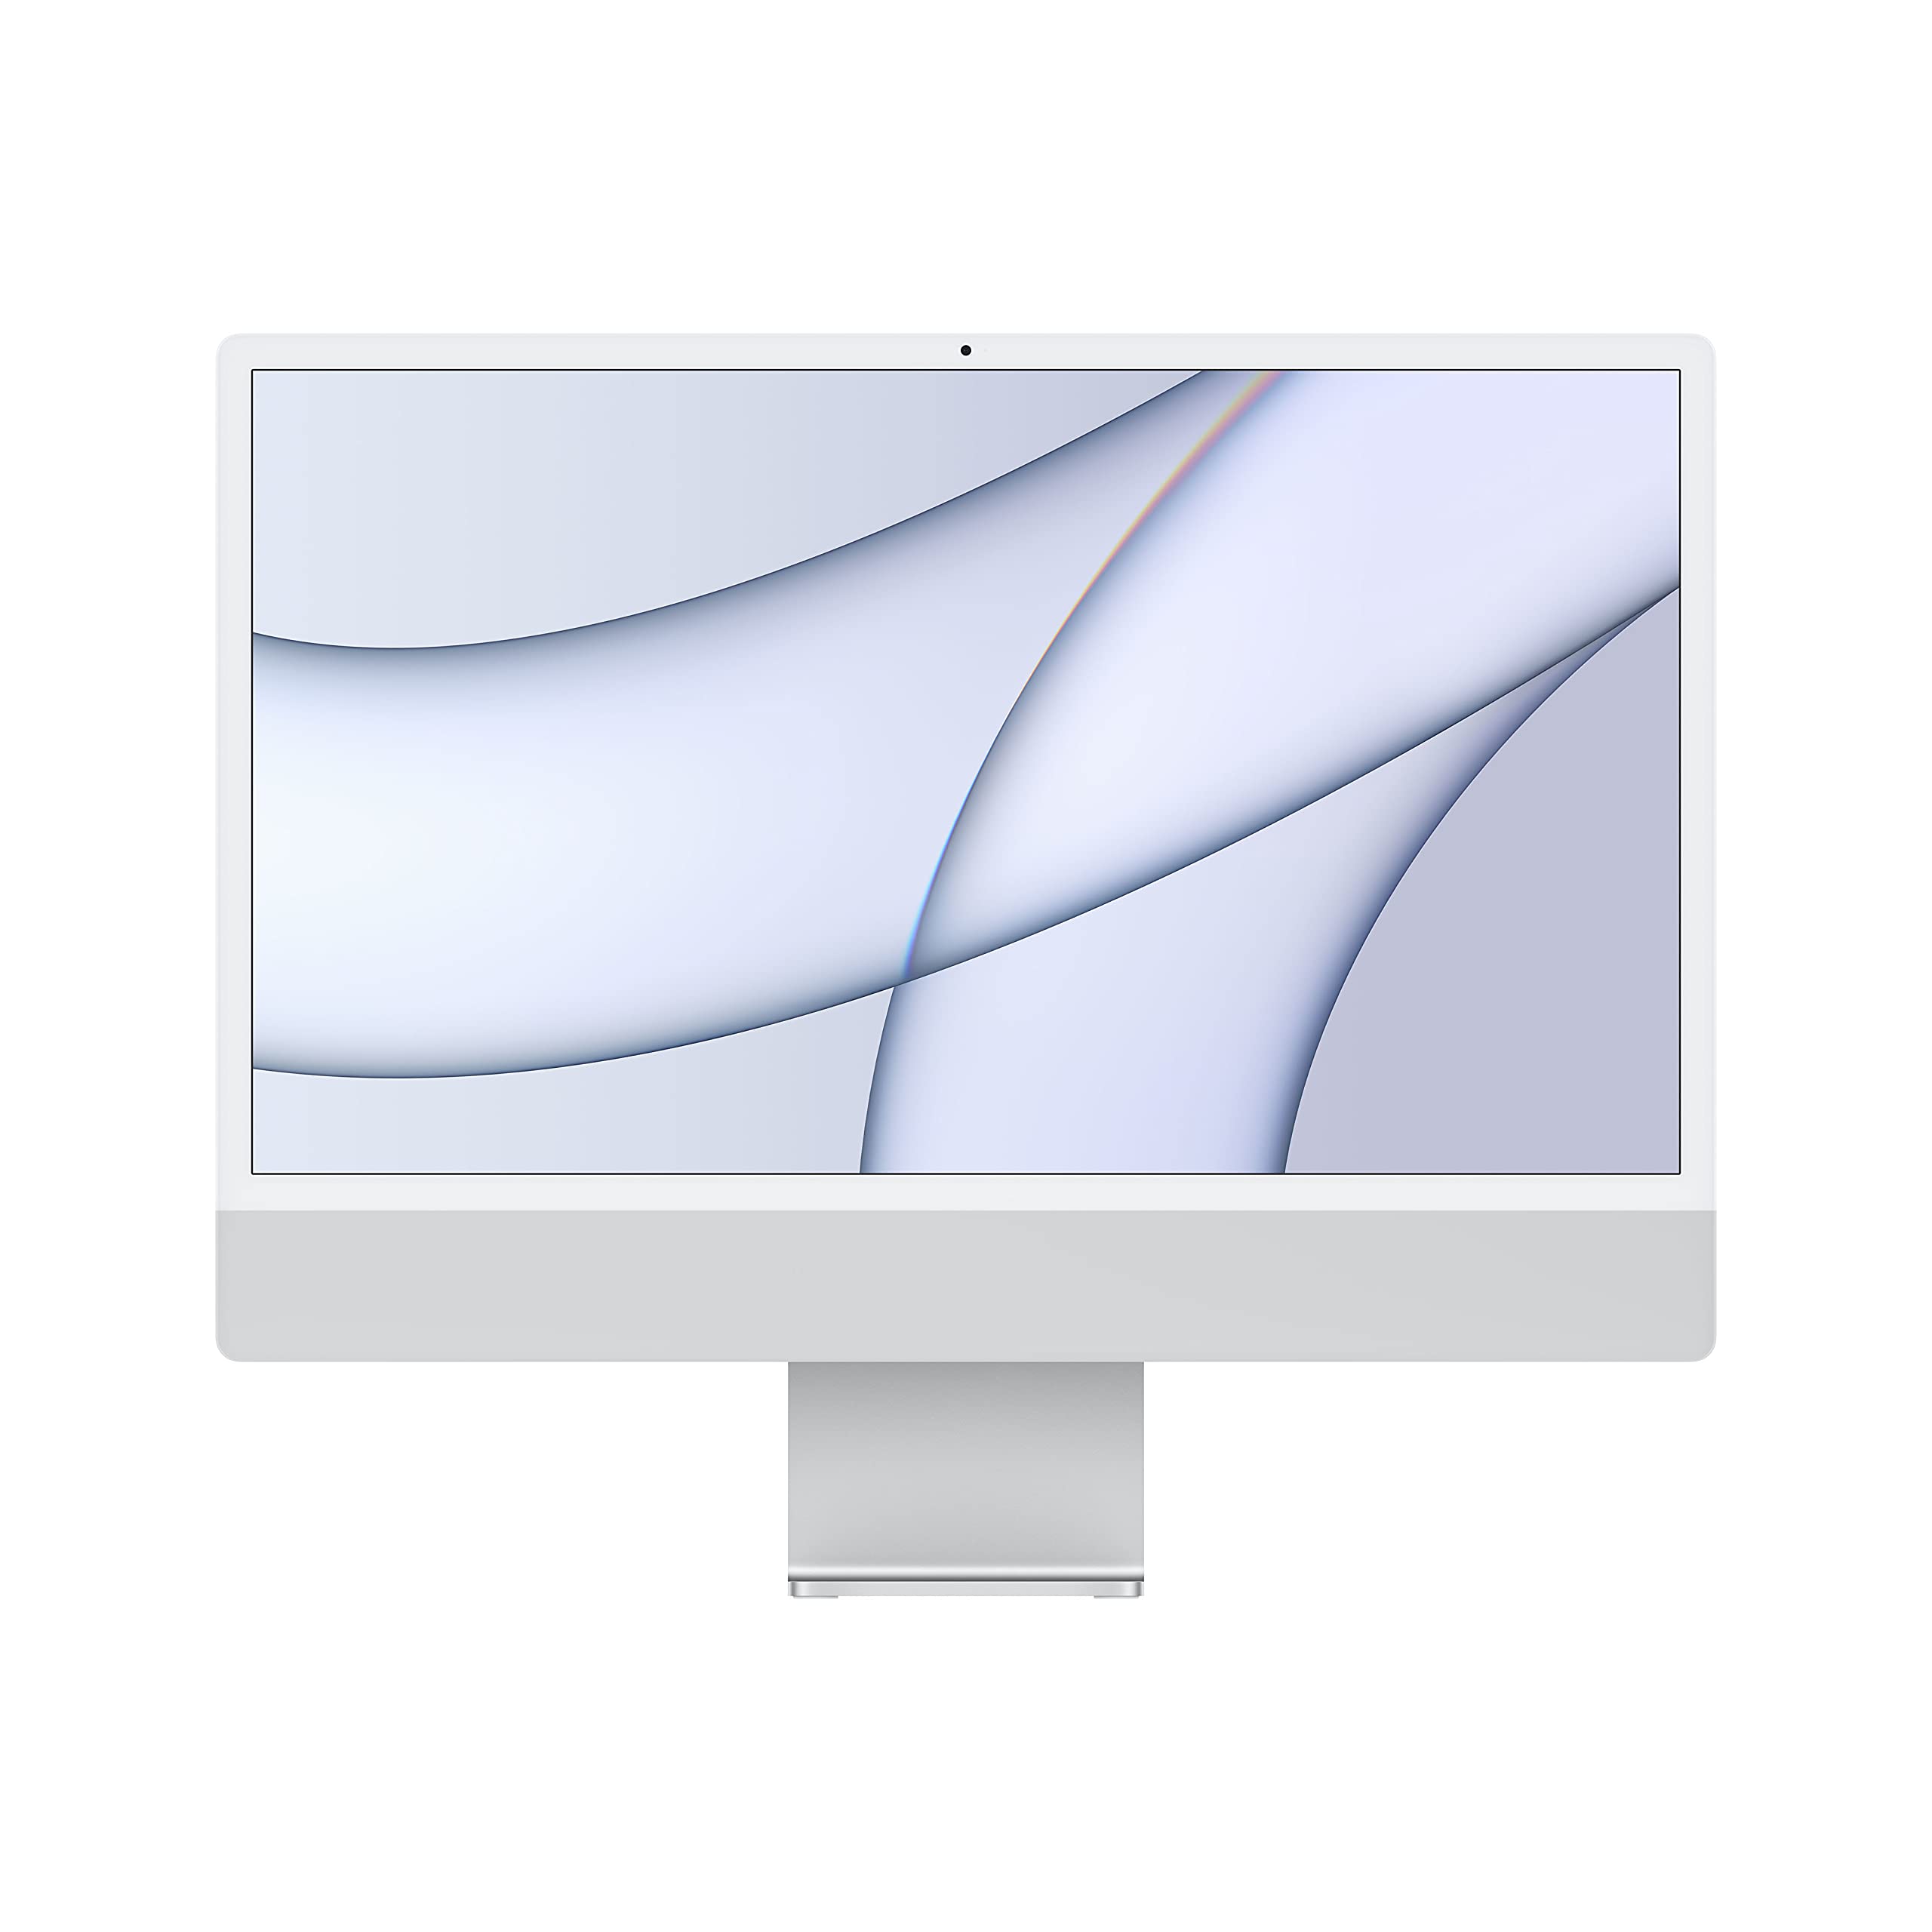 Apple 2021 iMac All-in-One Desktopcomputer mit M1 Chip: 8-Core CPU, 8-Core GPU, 24" Retina Display, 8 GB RAM, 512 GB SSD Speicher, 1080p FaceTime HD Kamera. Funktioniert mit iPhone/iPad, Silber